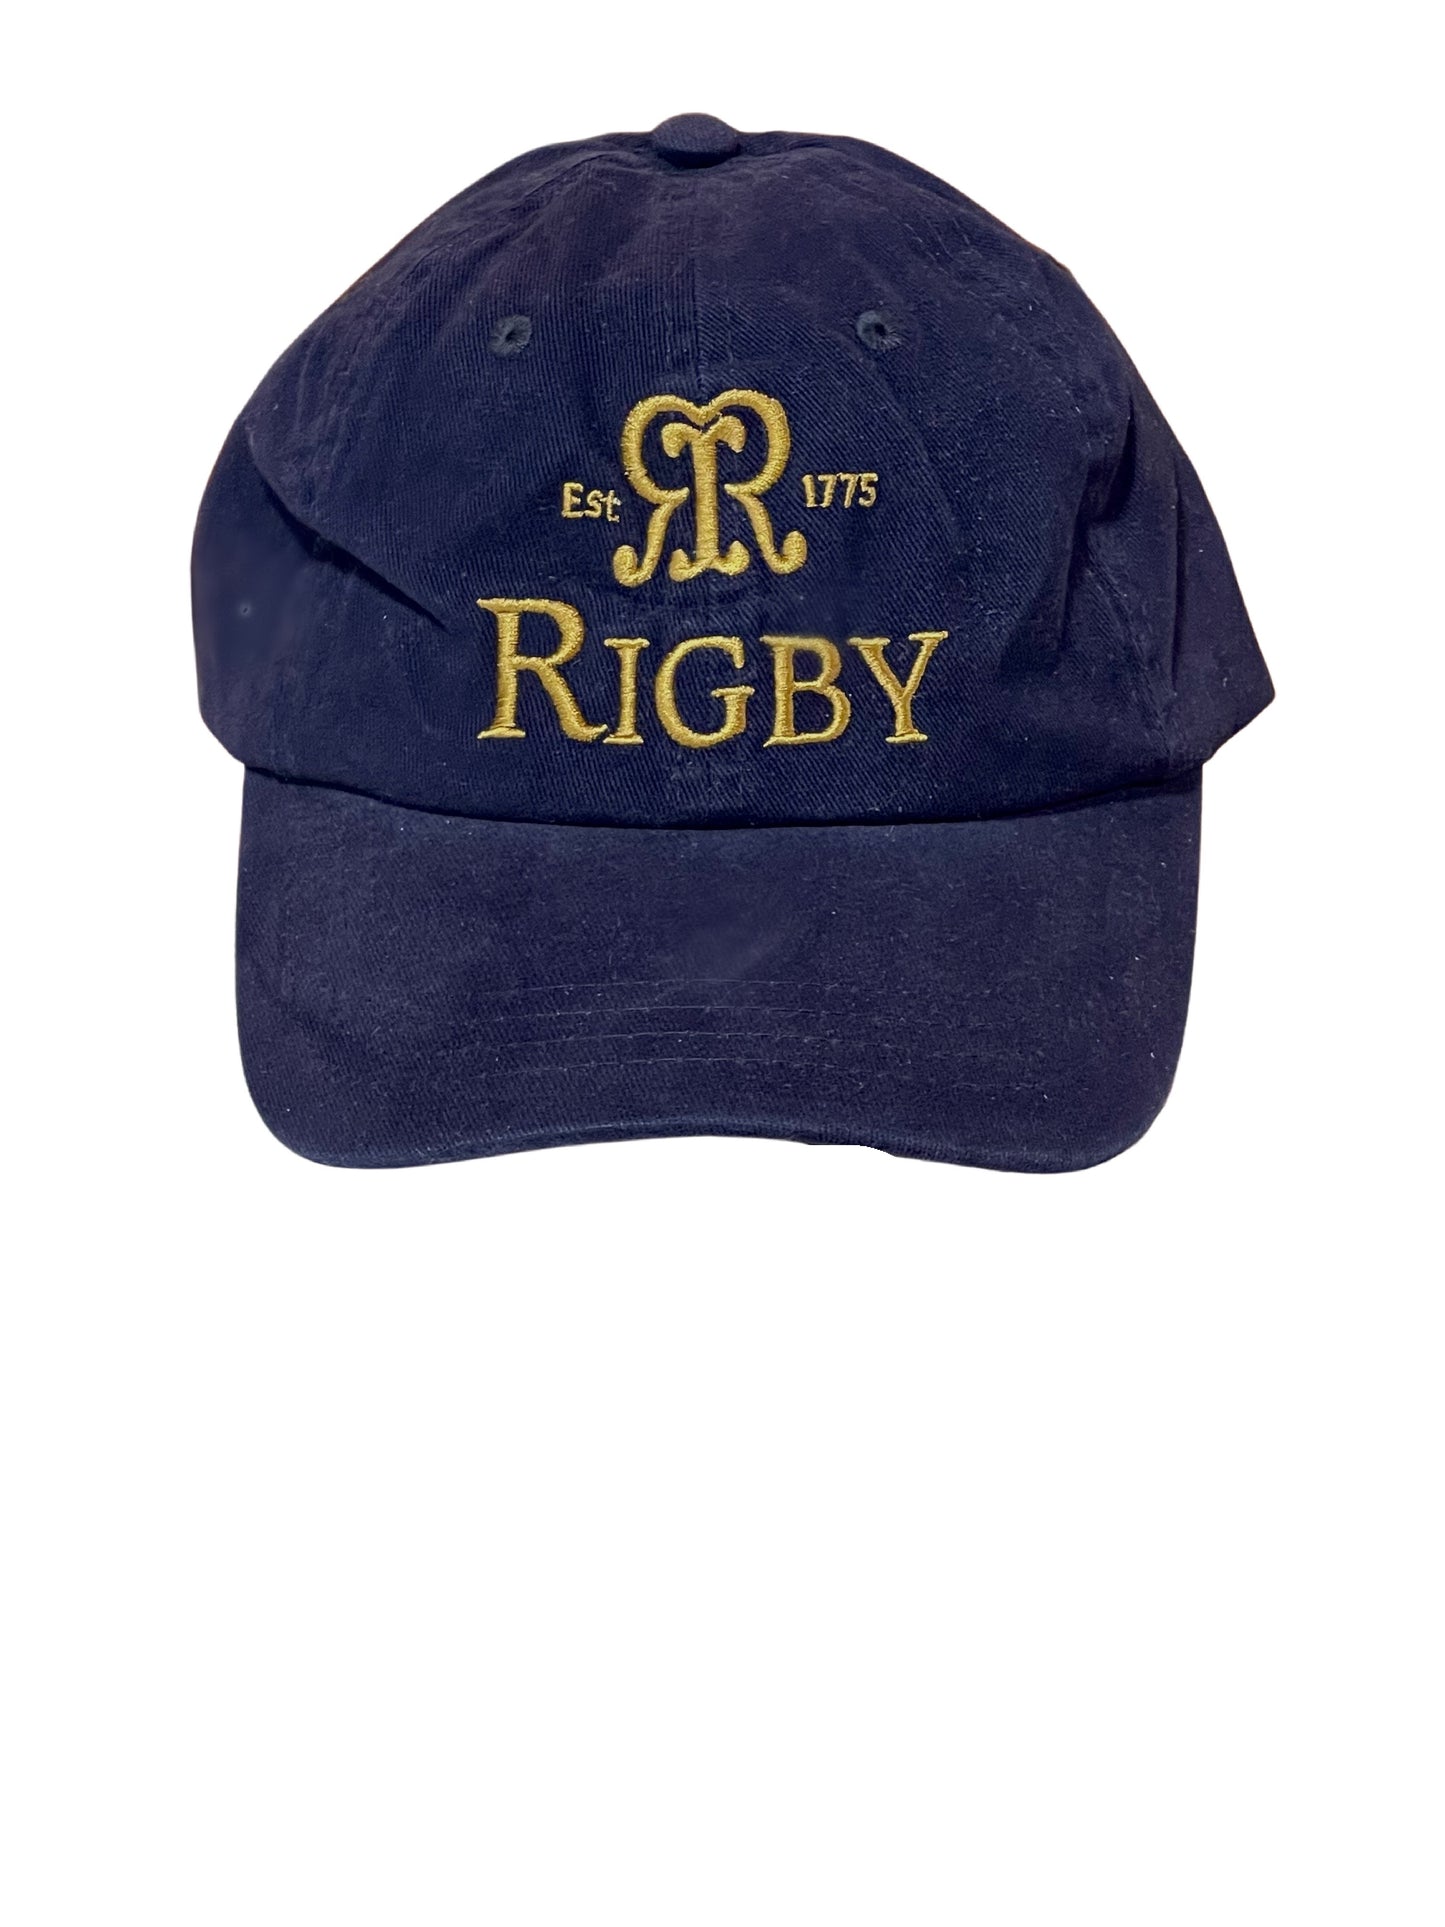 Rigby Baseball Cap